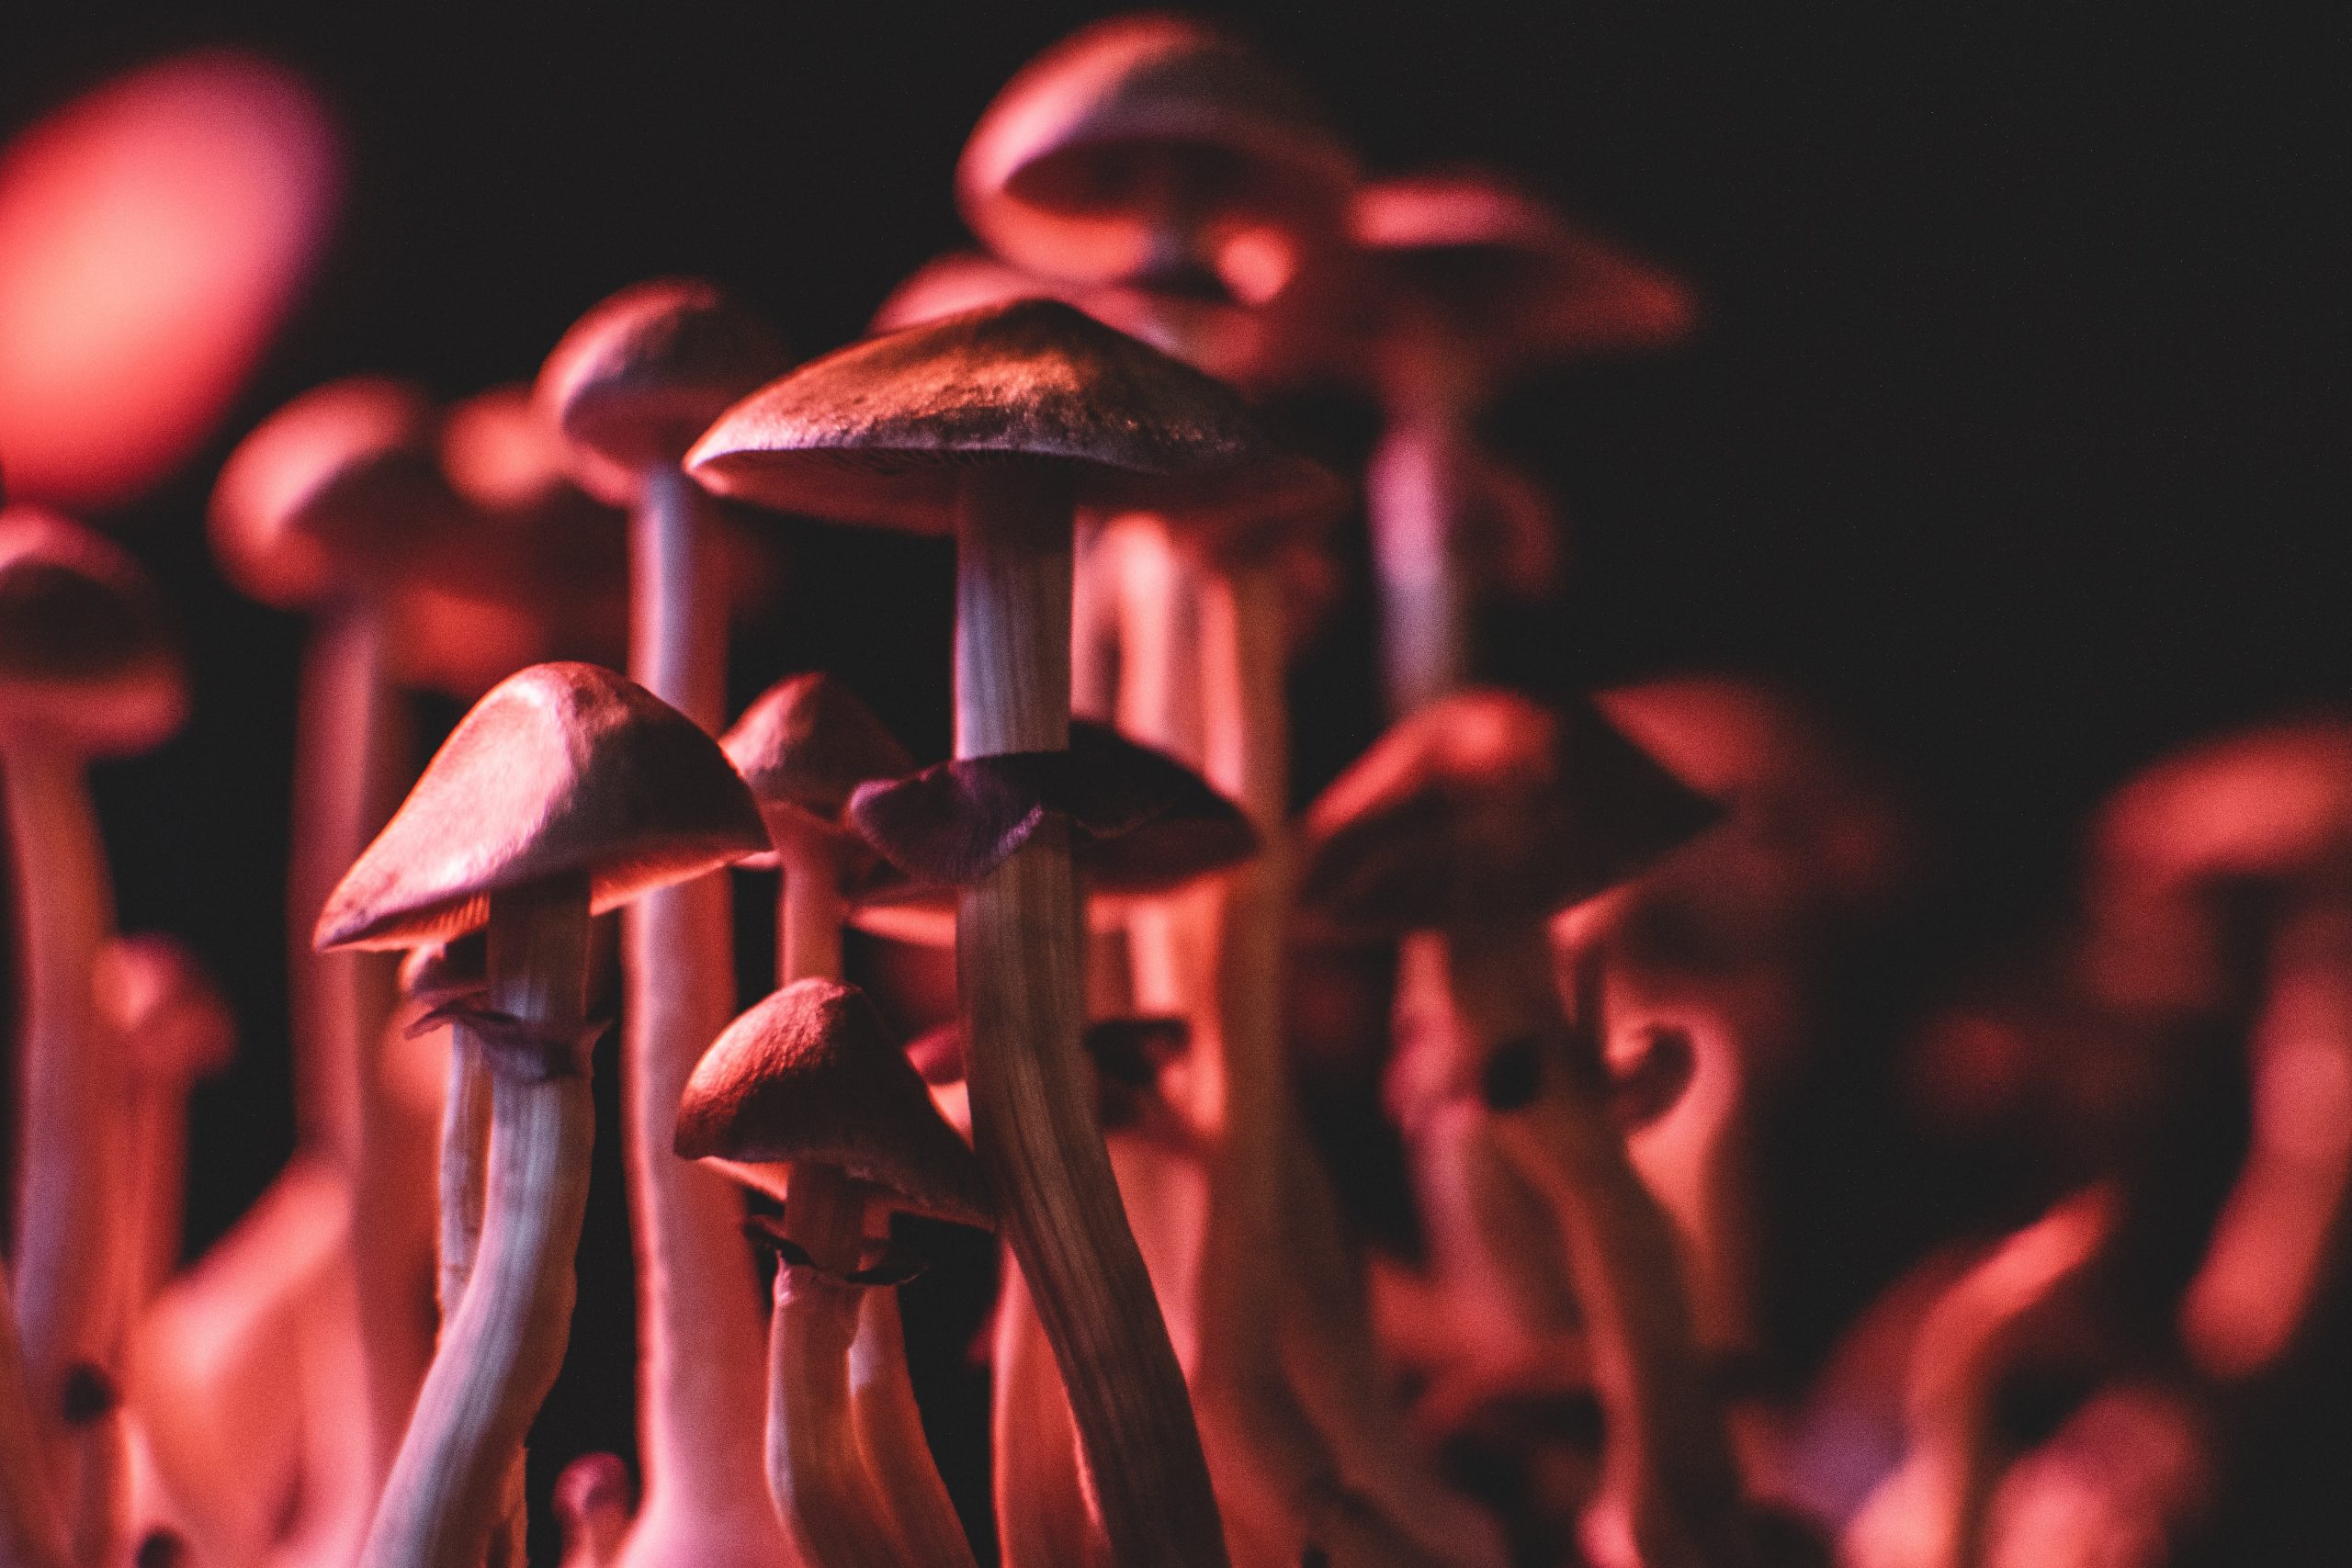 Brown mushrooms with black background